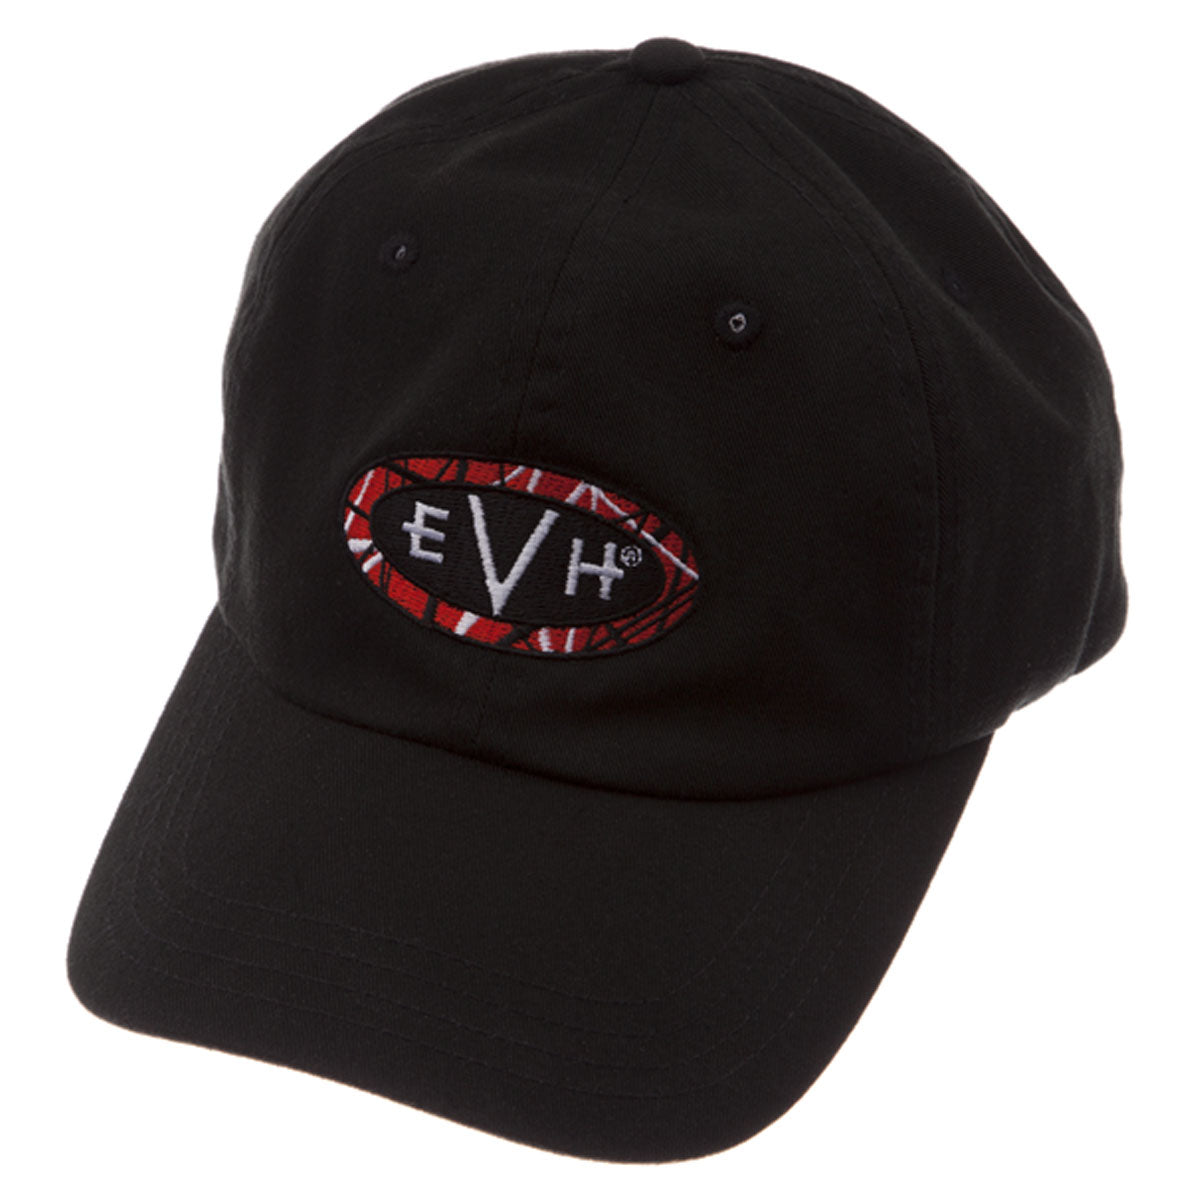 EVH Baseball Hat, Black - 9123003000